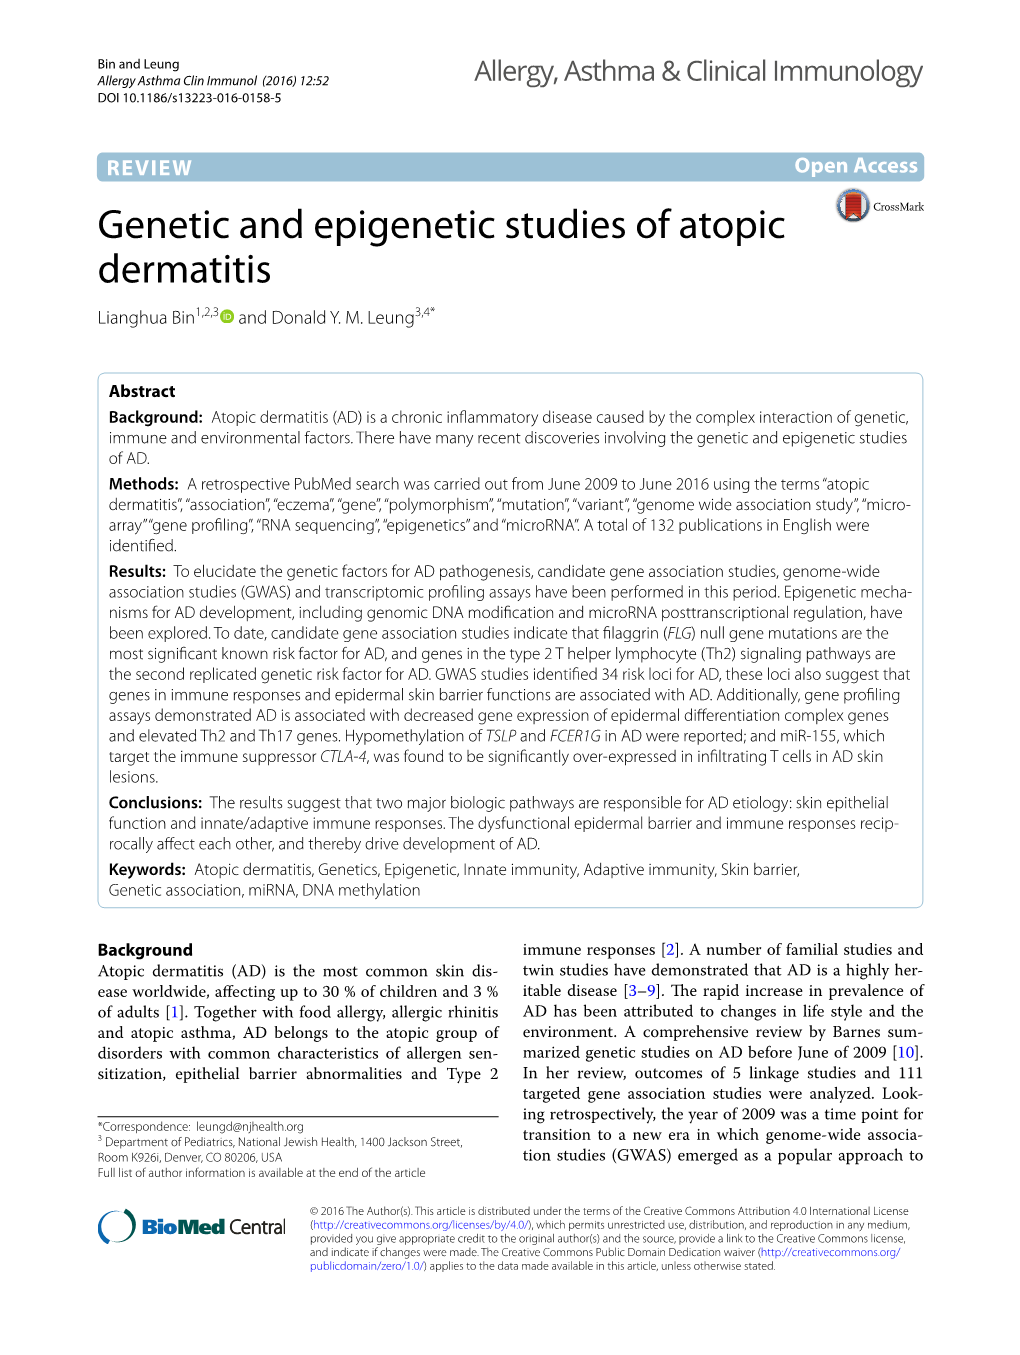 Genetic and Epigenetic Studies of Atopic Dermatitis Lianghua Bin1,2,3 and Donald Y